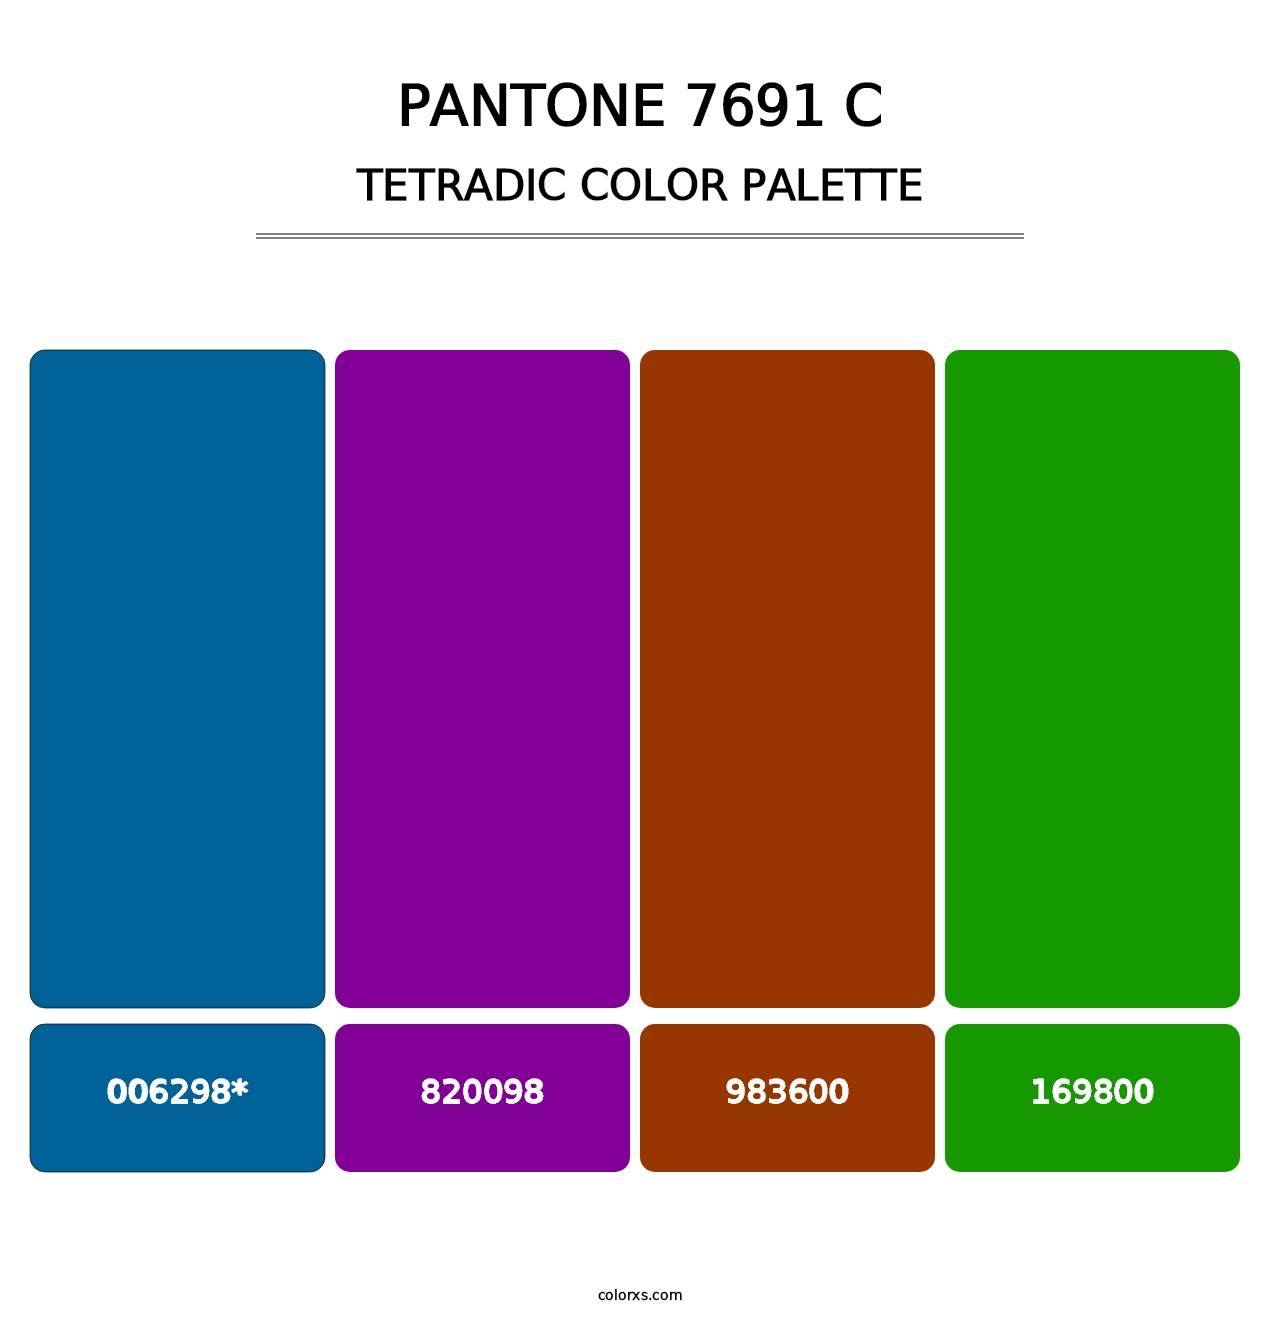 PANTONE 7691 C - Tetradic Color Palette